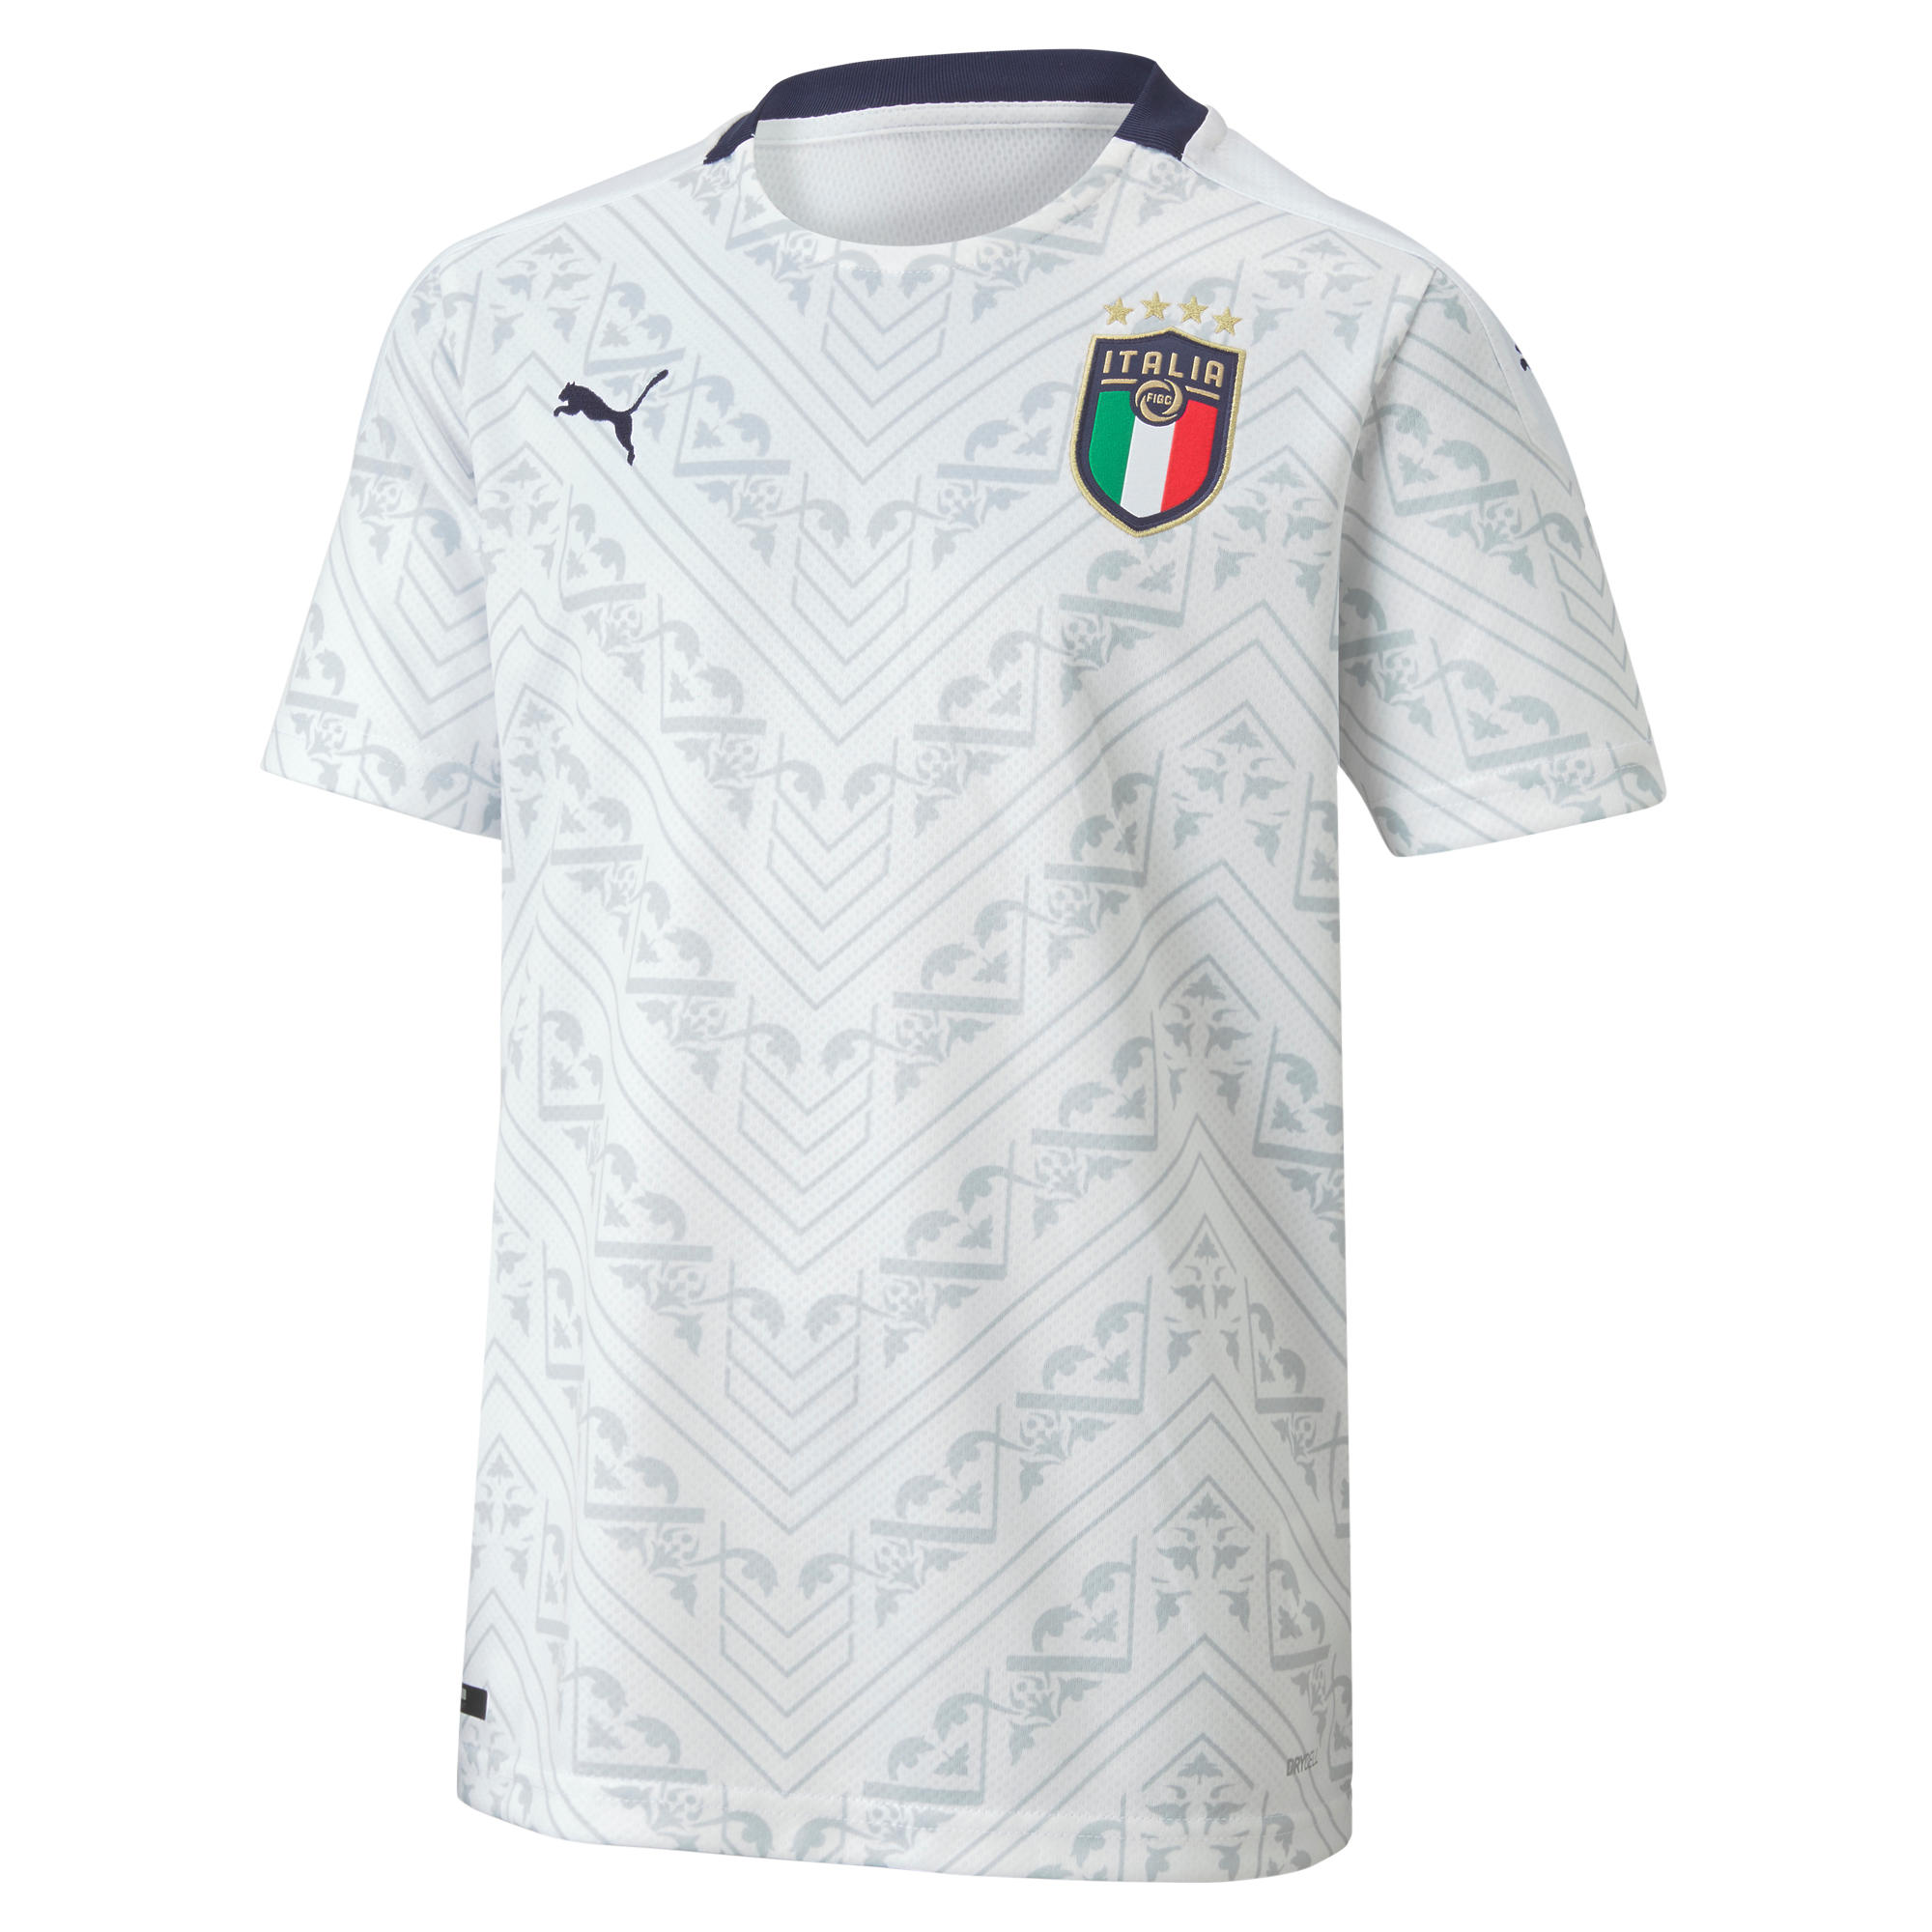 Tricou Rotbal Replică Italia imagine produs